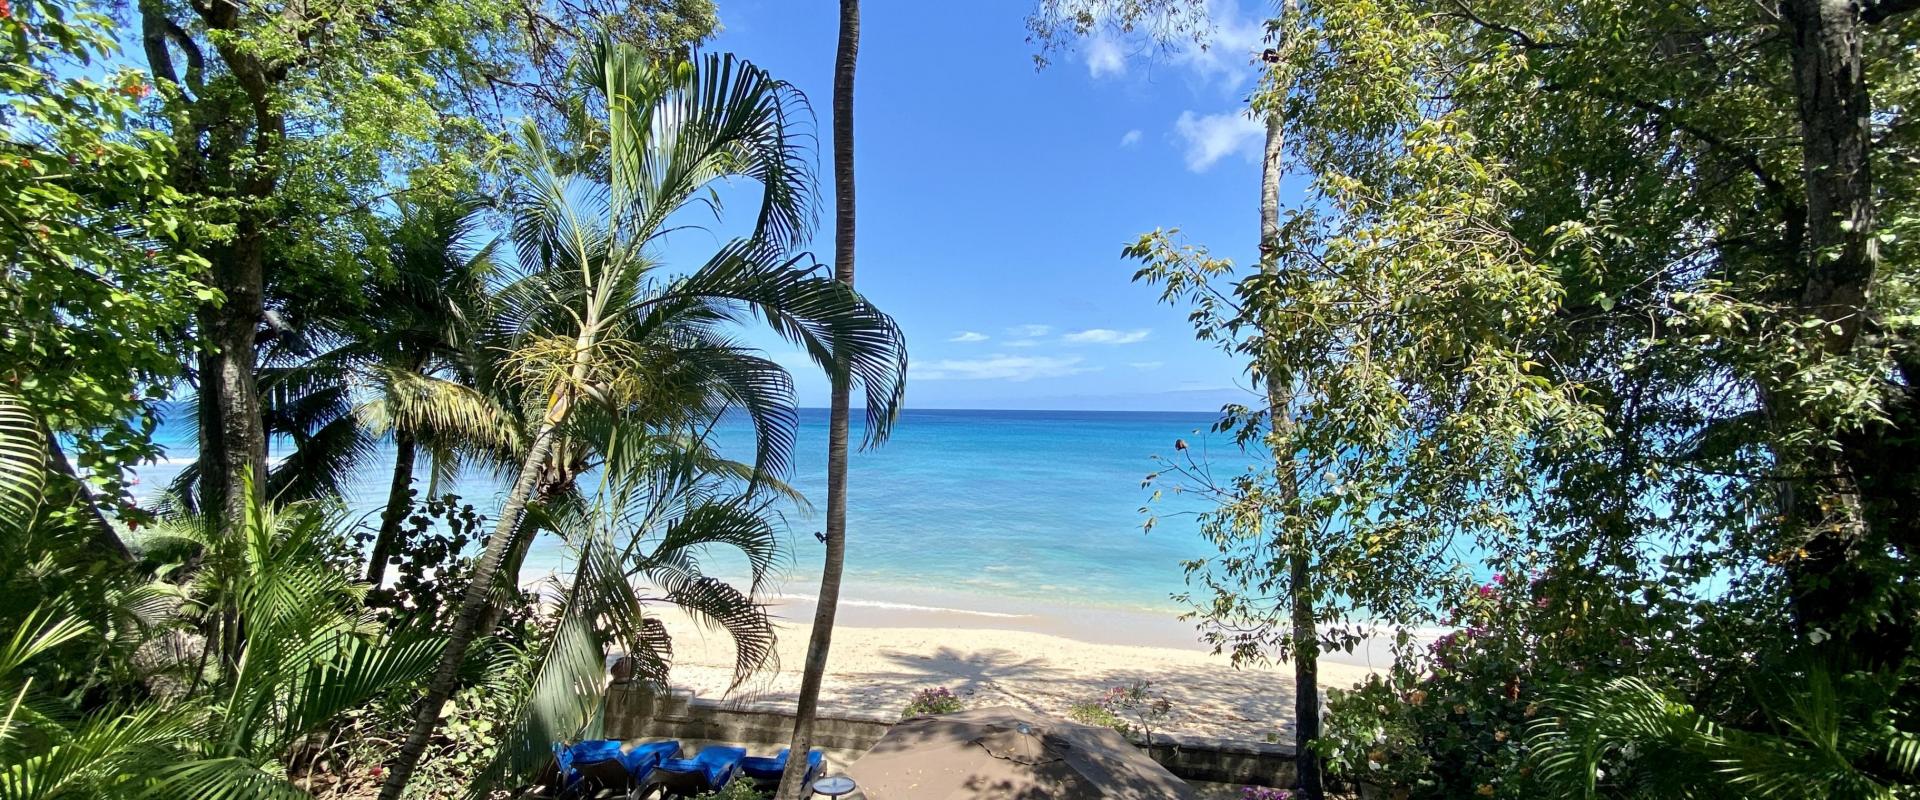 Beachfront Barbados Villa Rental Seascape View From Bedroom To Ocean